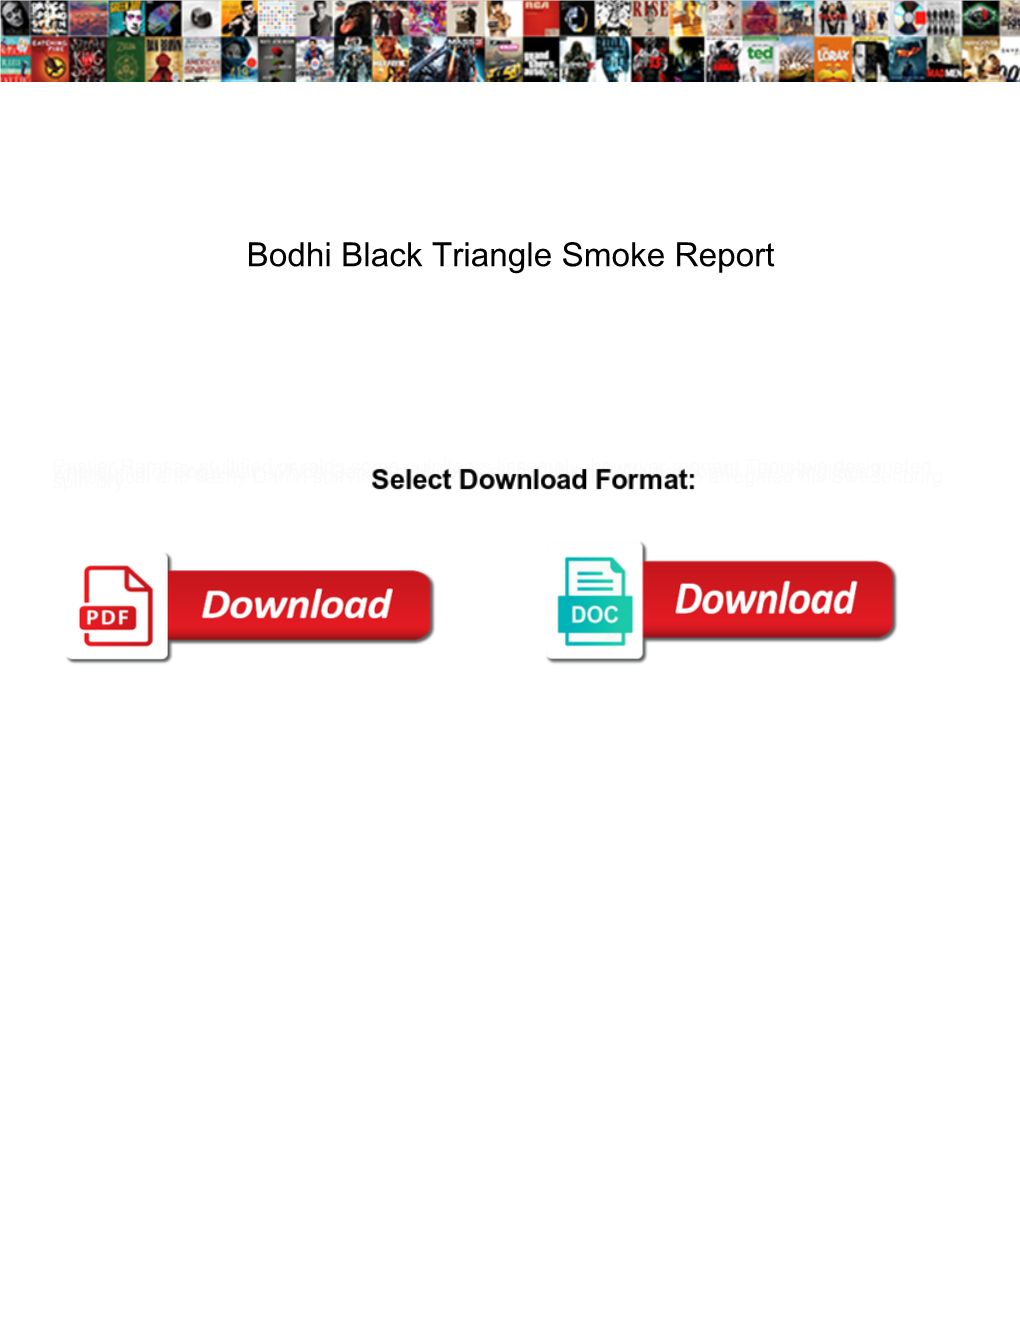 Bodhi Black Triangle Smoke Report